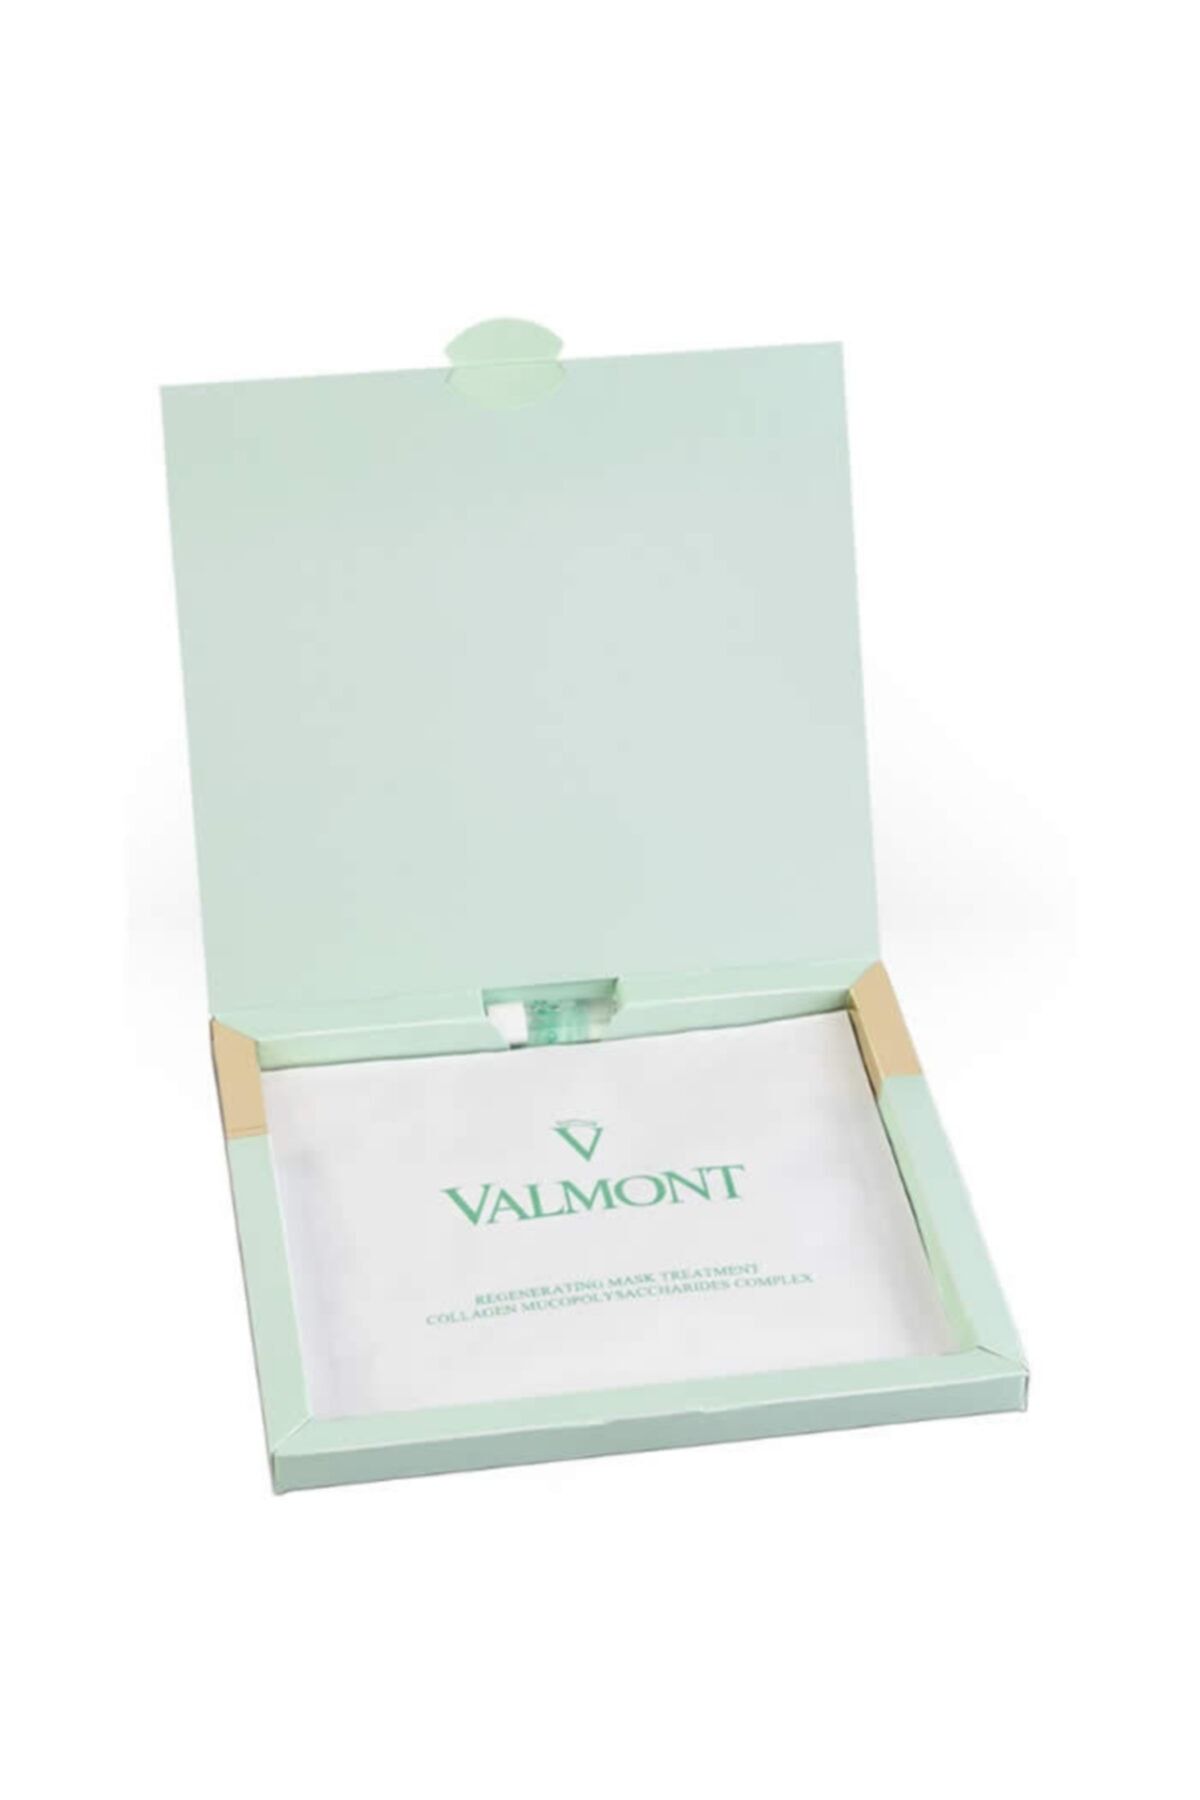 Valmont Regenerating Mask Treatment Single